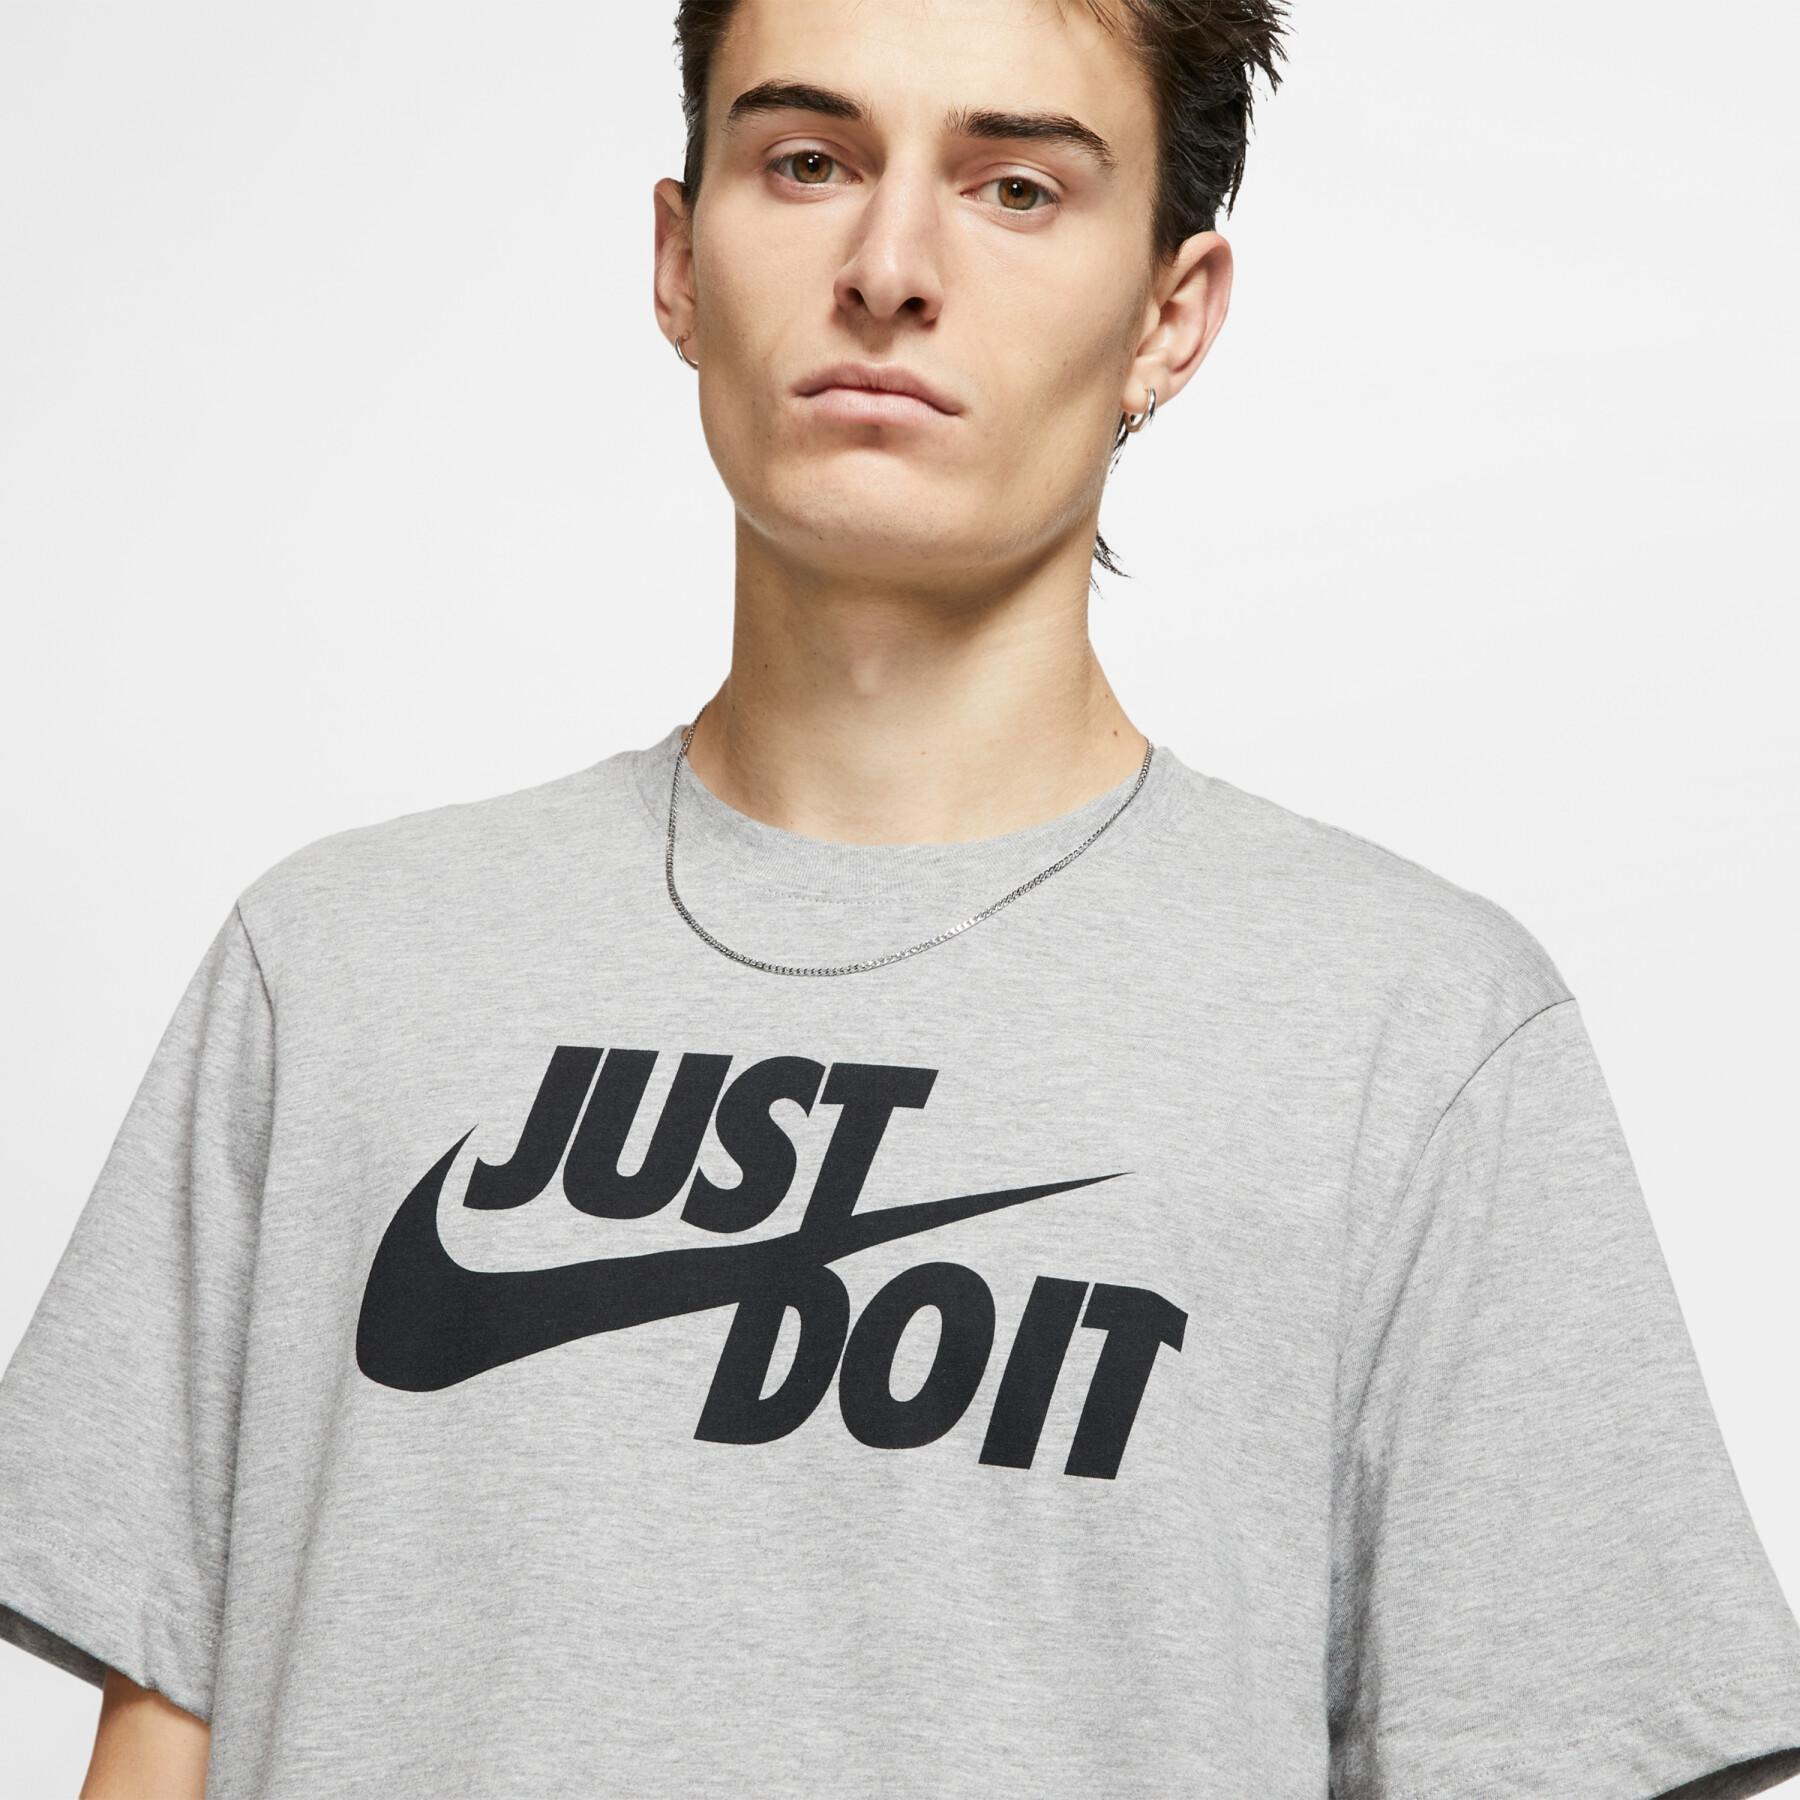 T-shirt Nike sportswear jdi